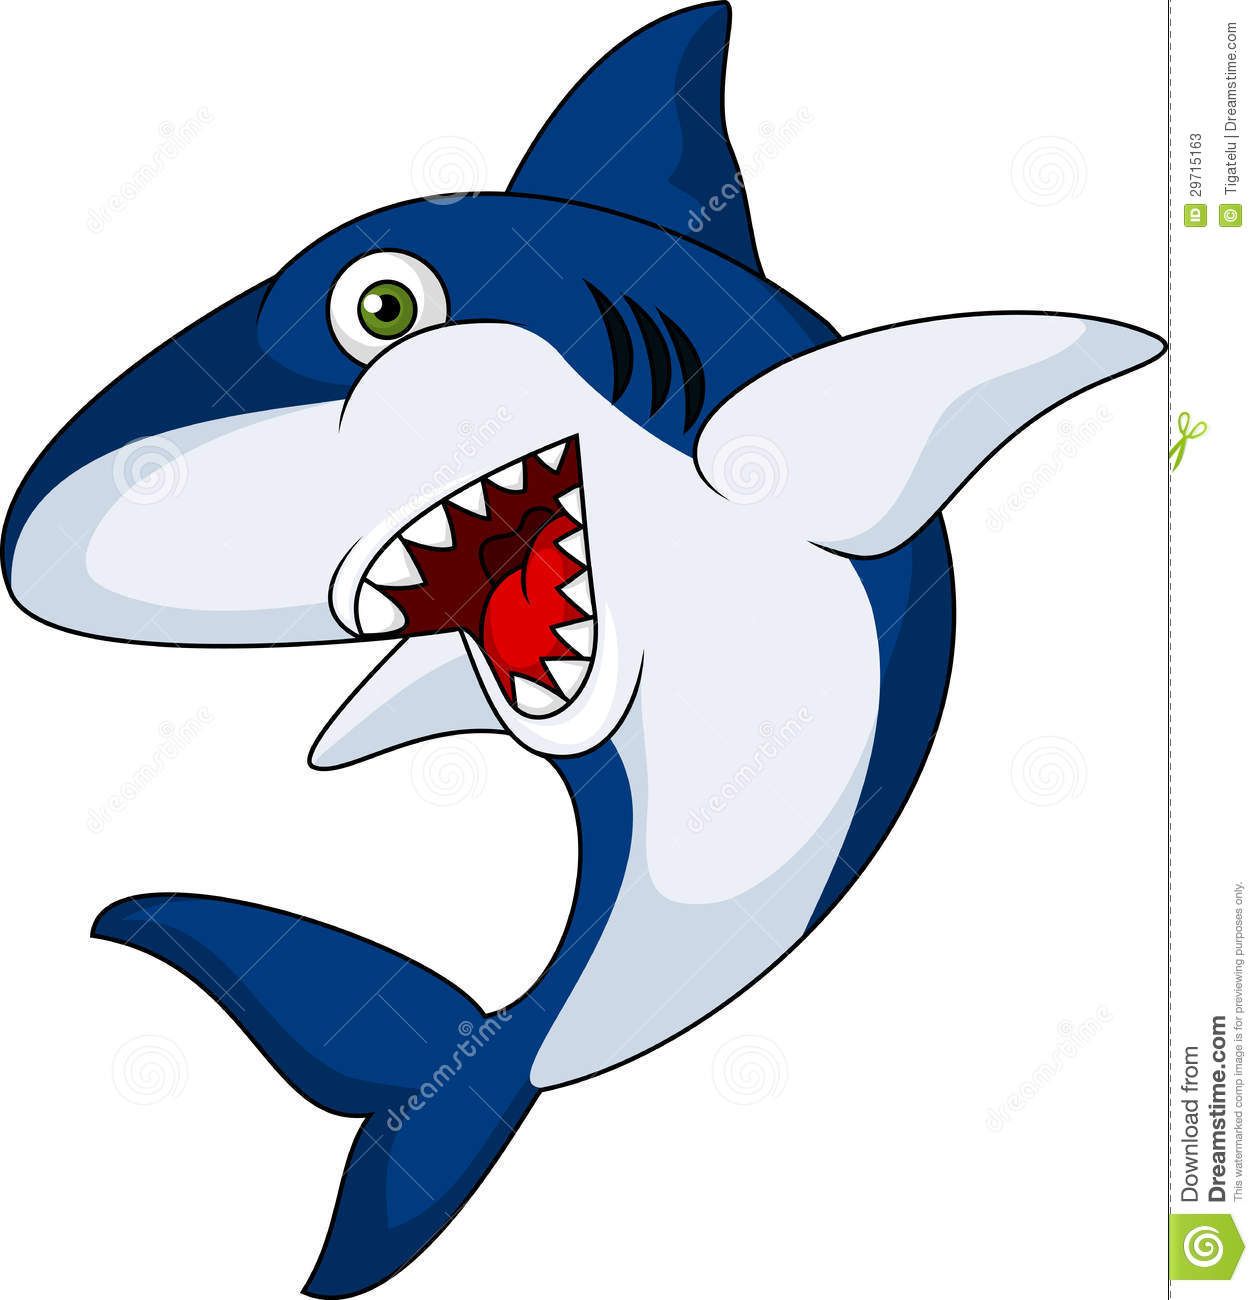 Cartoon shark images.